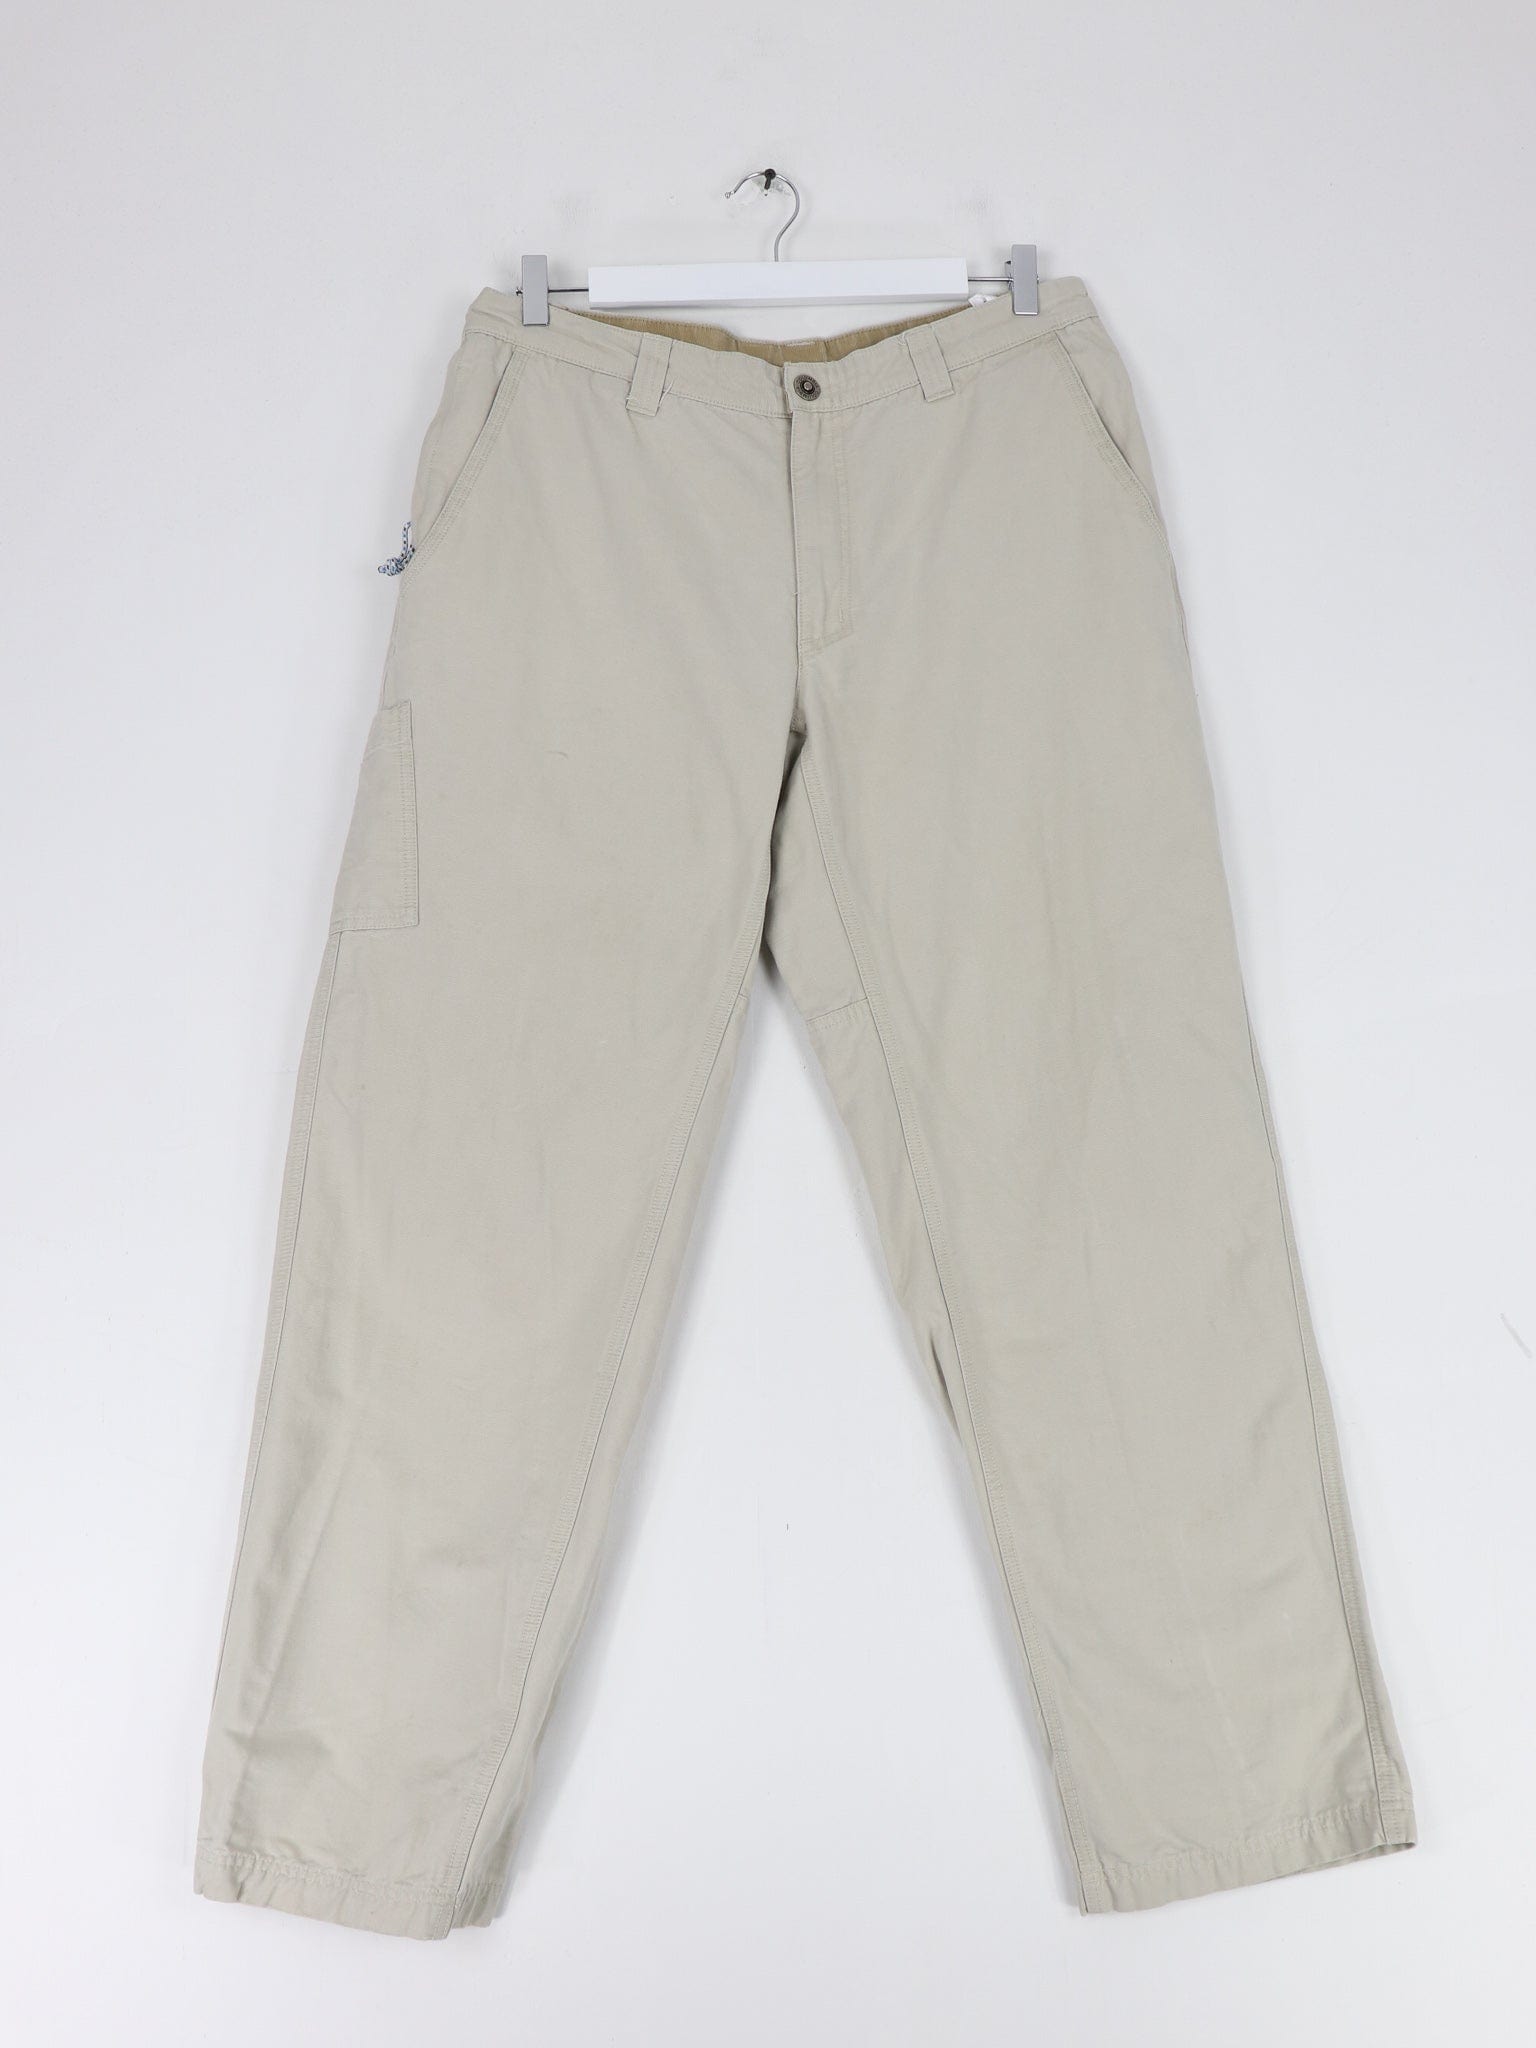 Columbia Pants Fits Men's 34x32 White Outdoor Hiking – Proper Vintage